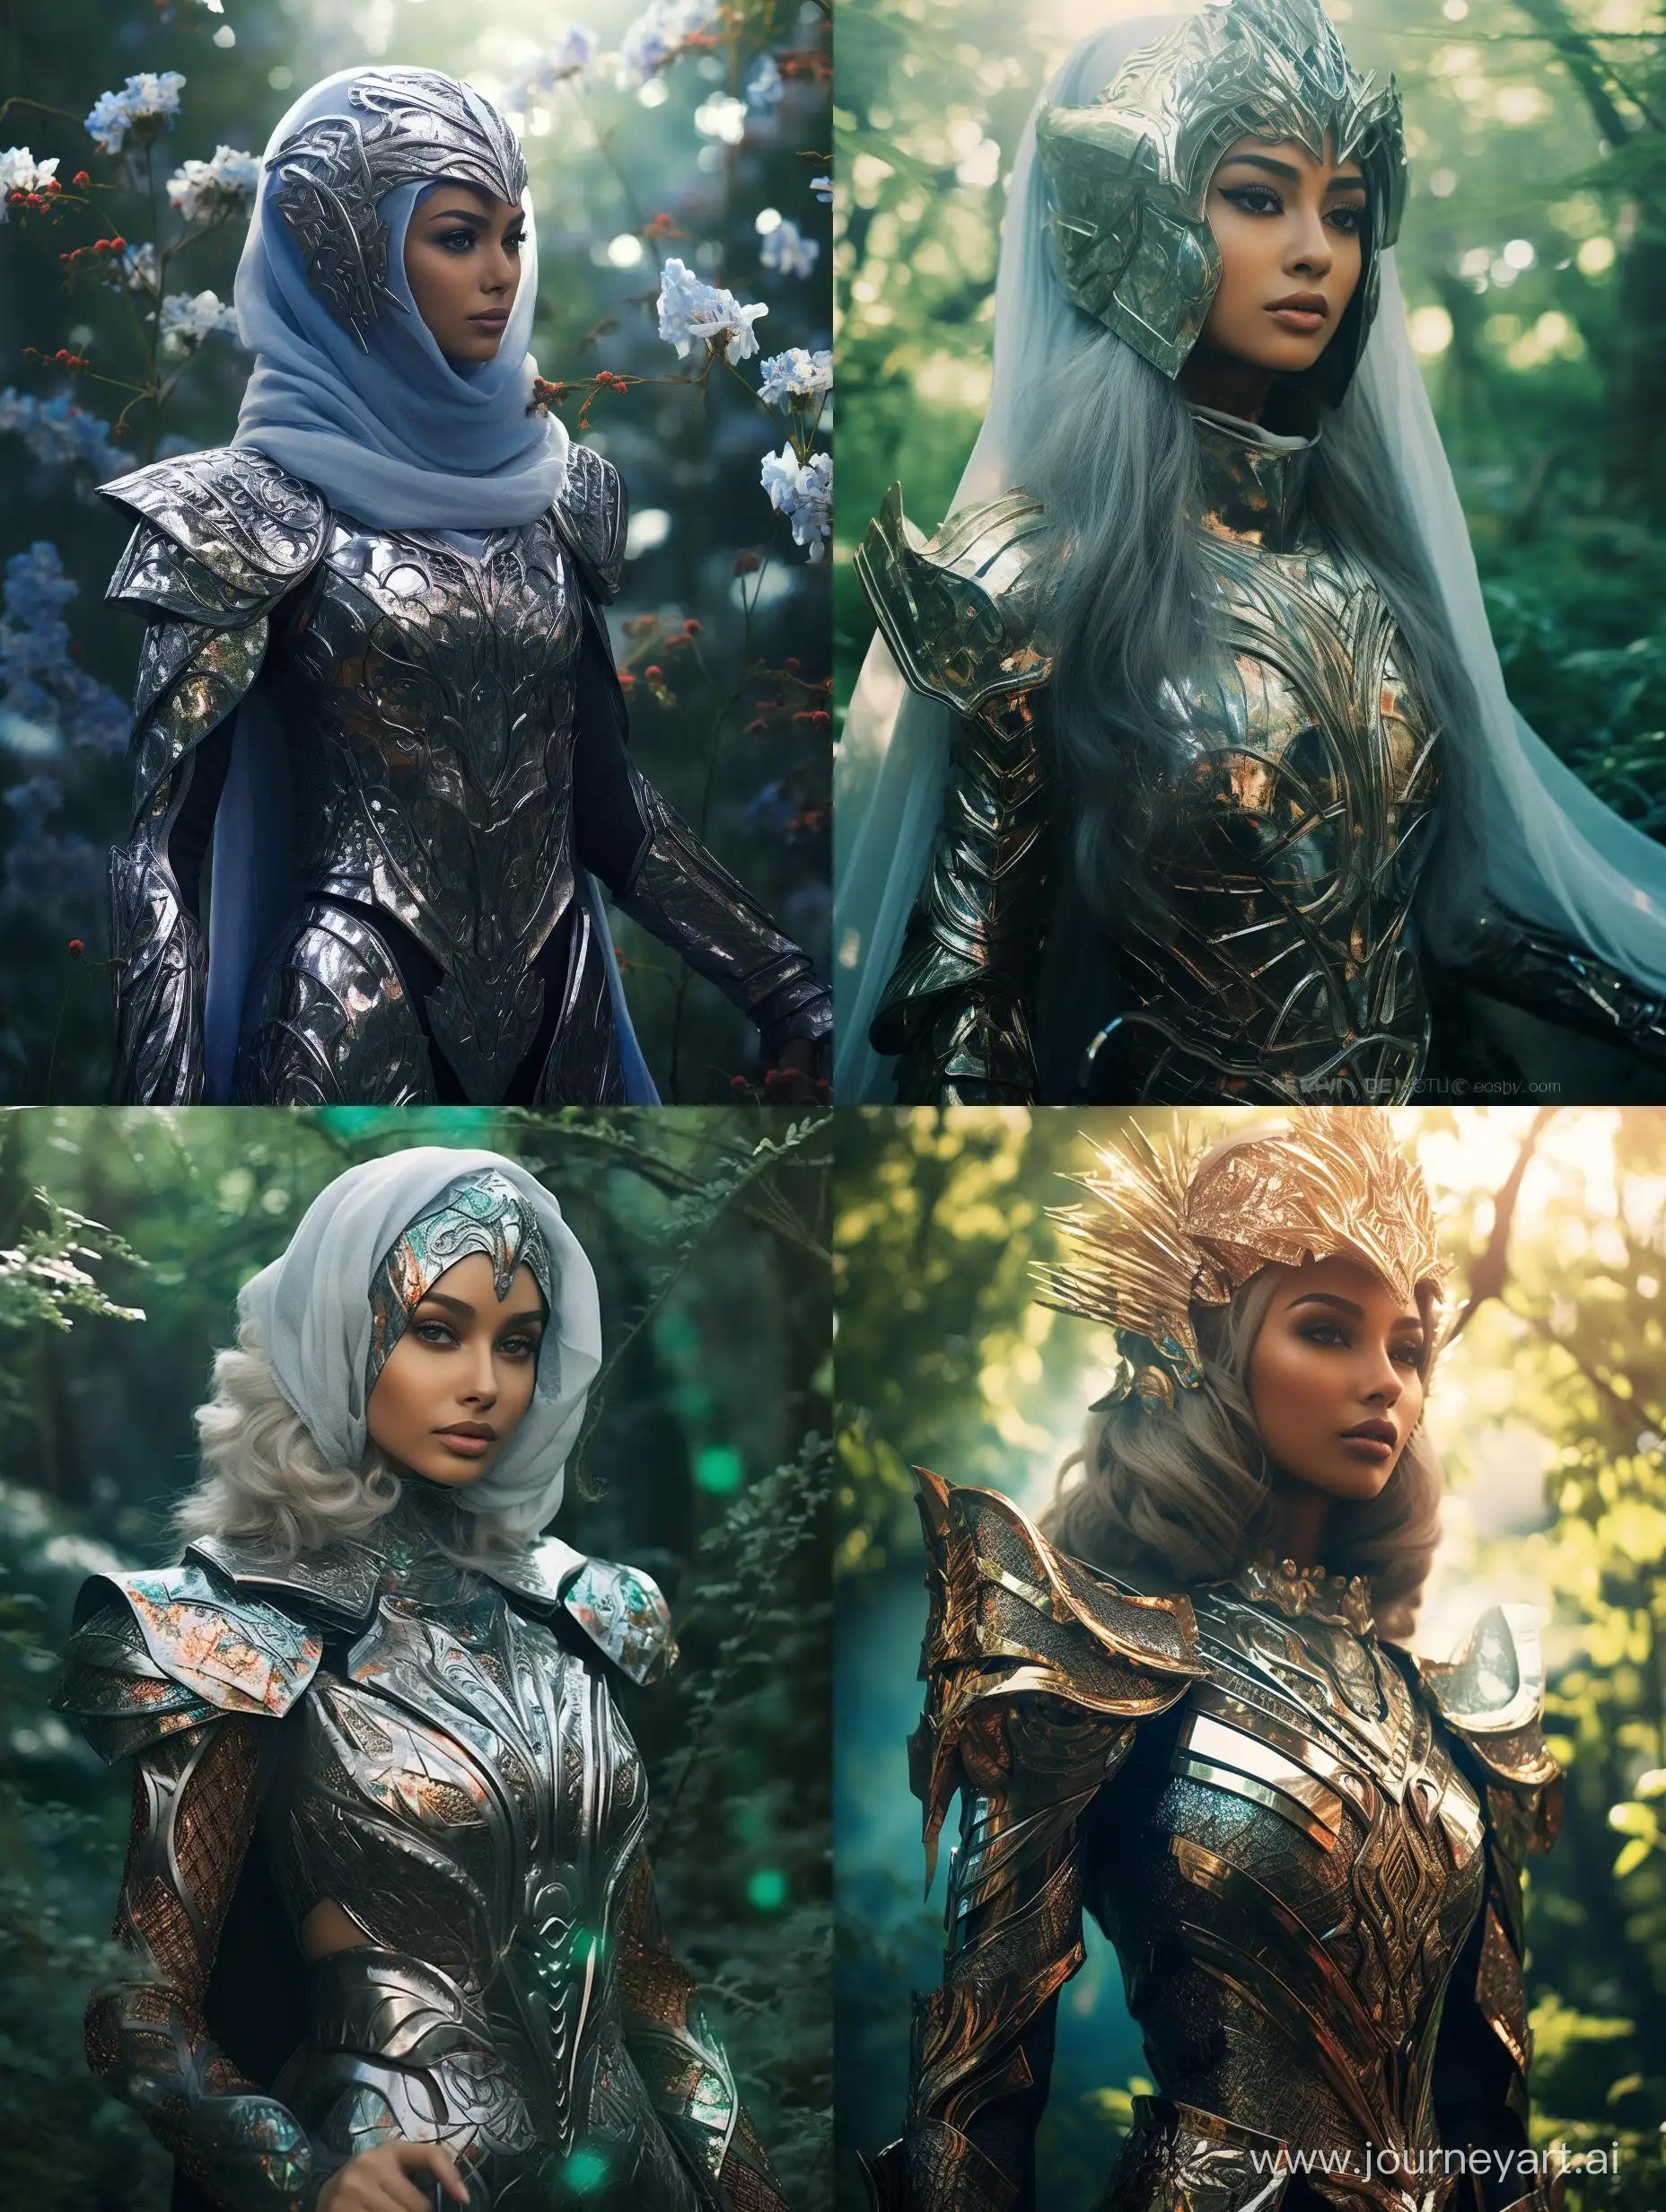 Futuristic-Arabian-Princess-in-Cybernetic-Dragon-Slayer-Armor